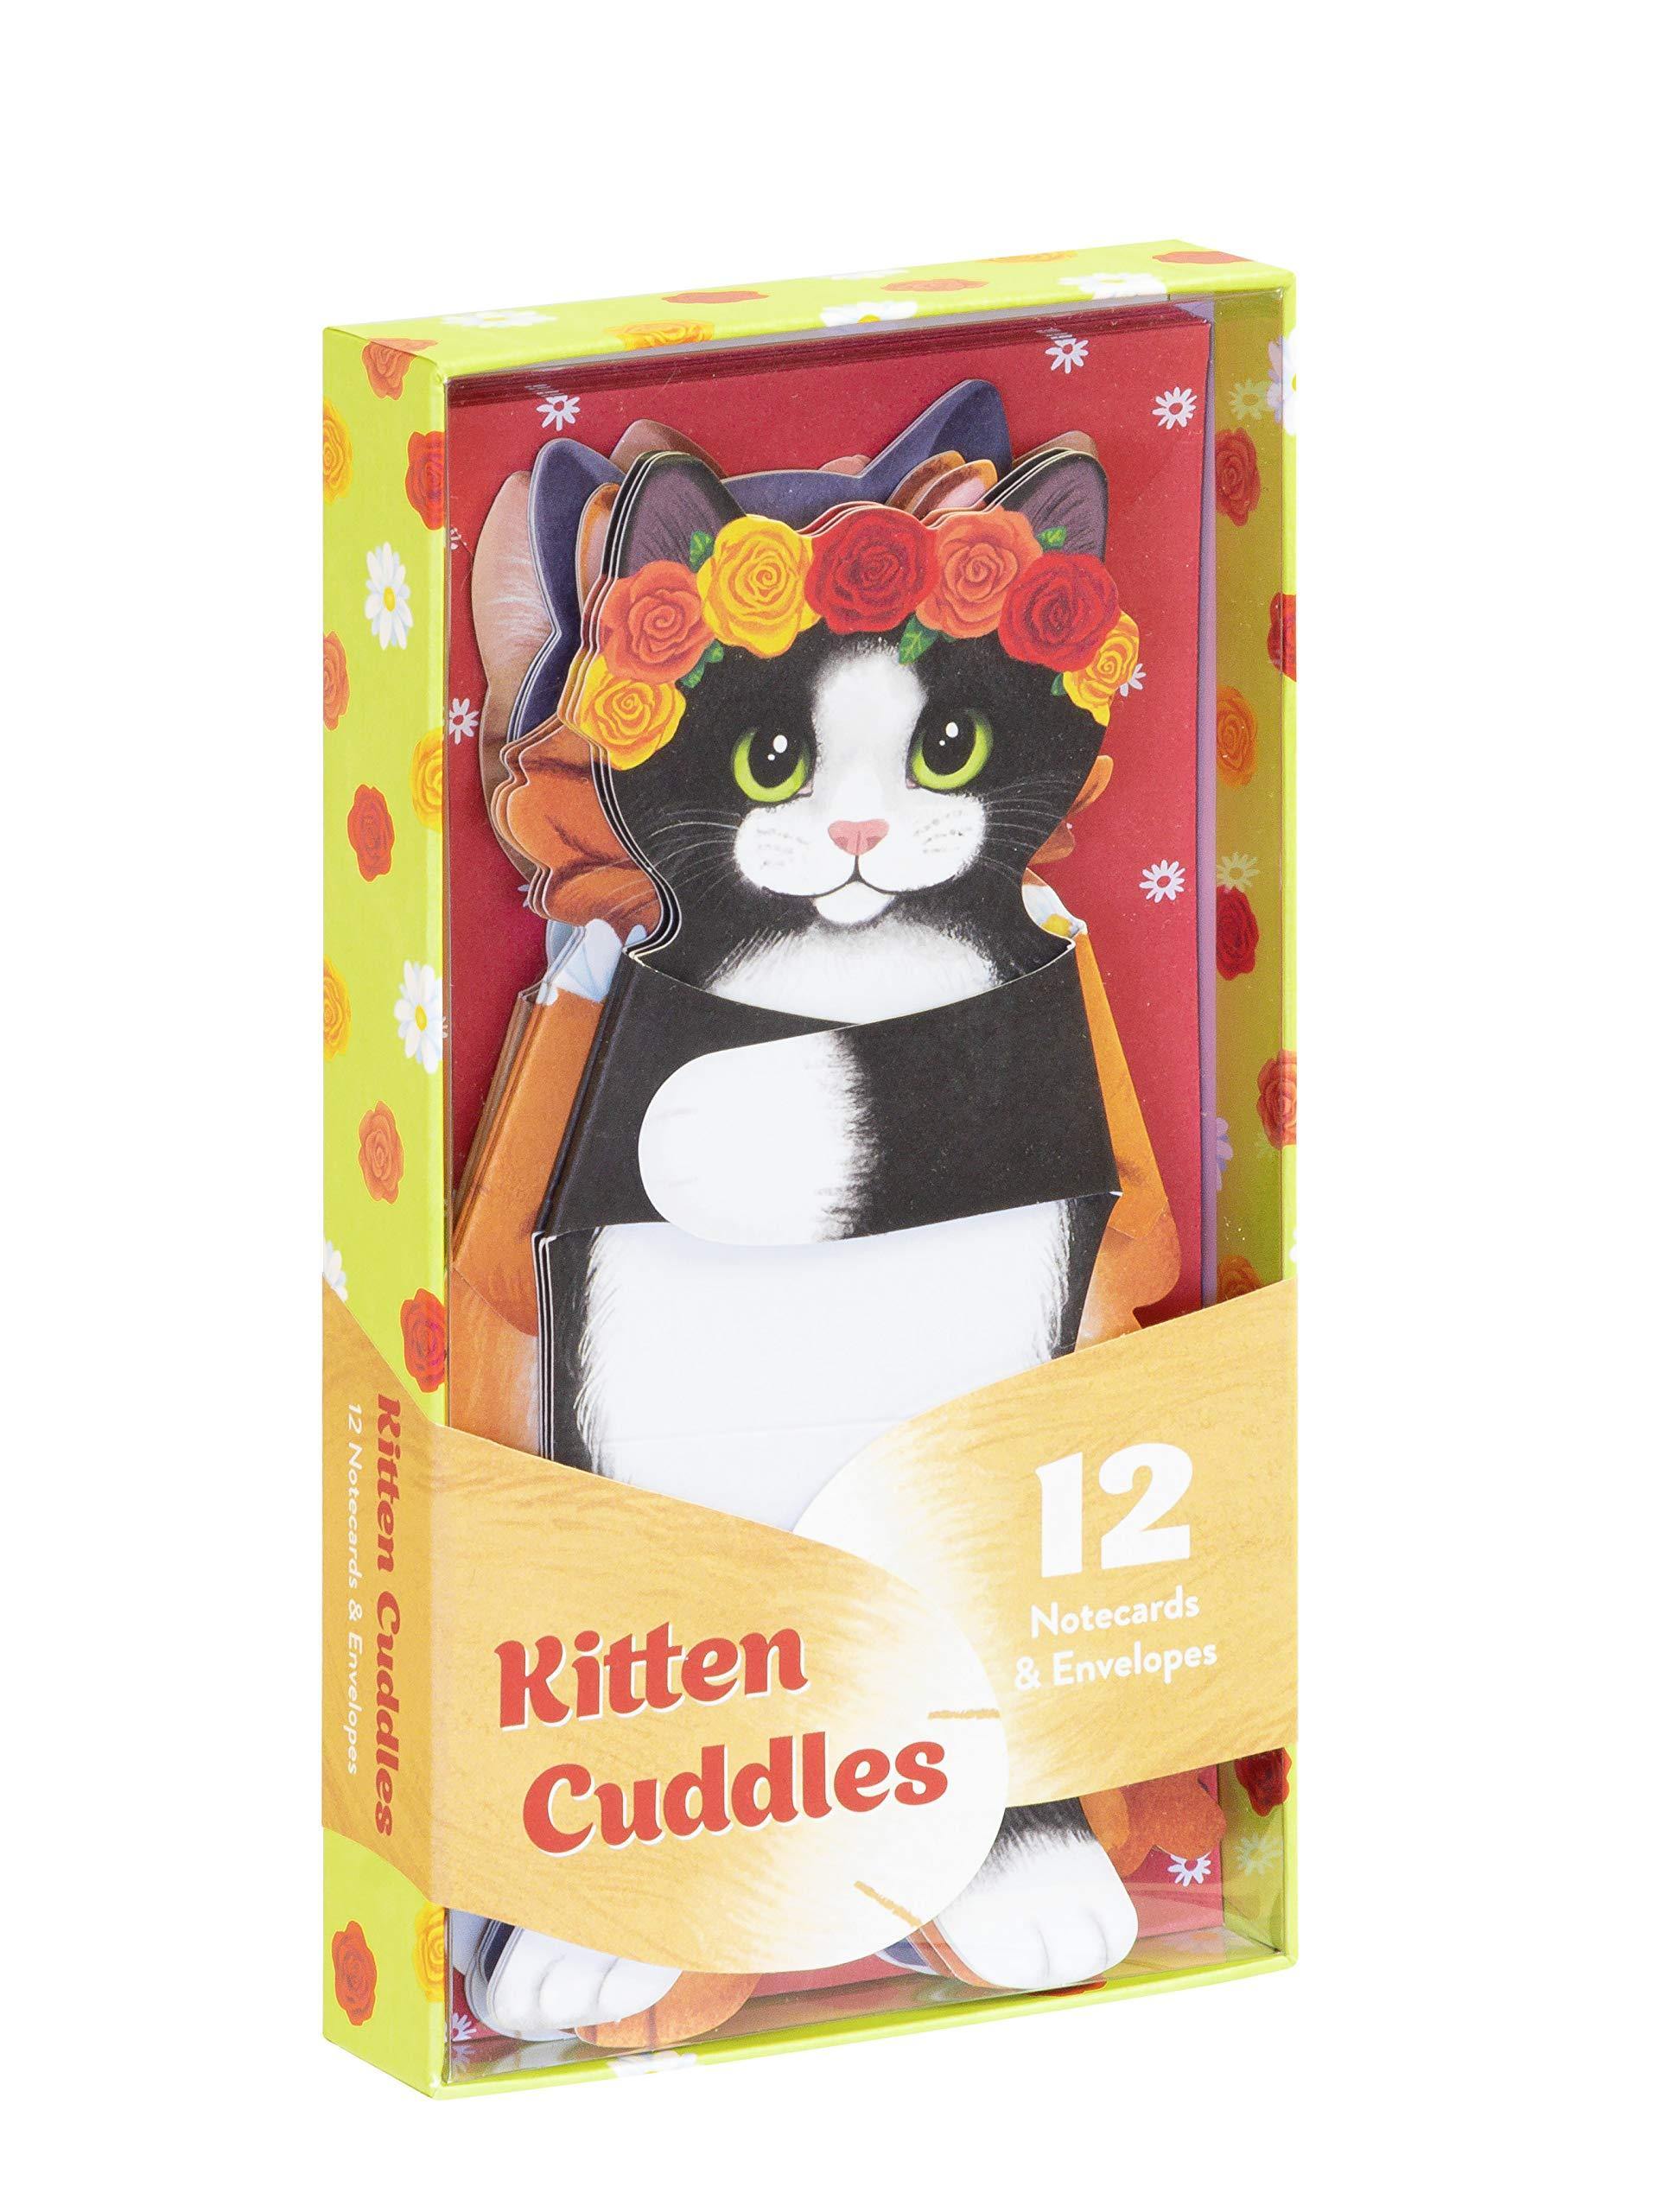 Kitten Cuddles Notecards Set - Penny Black